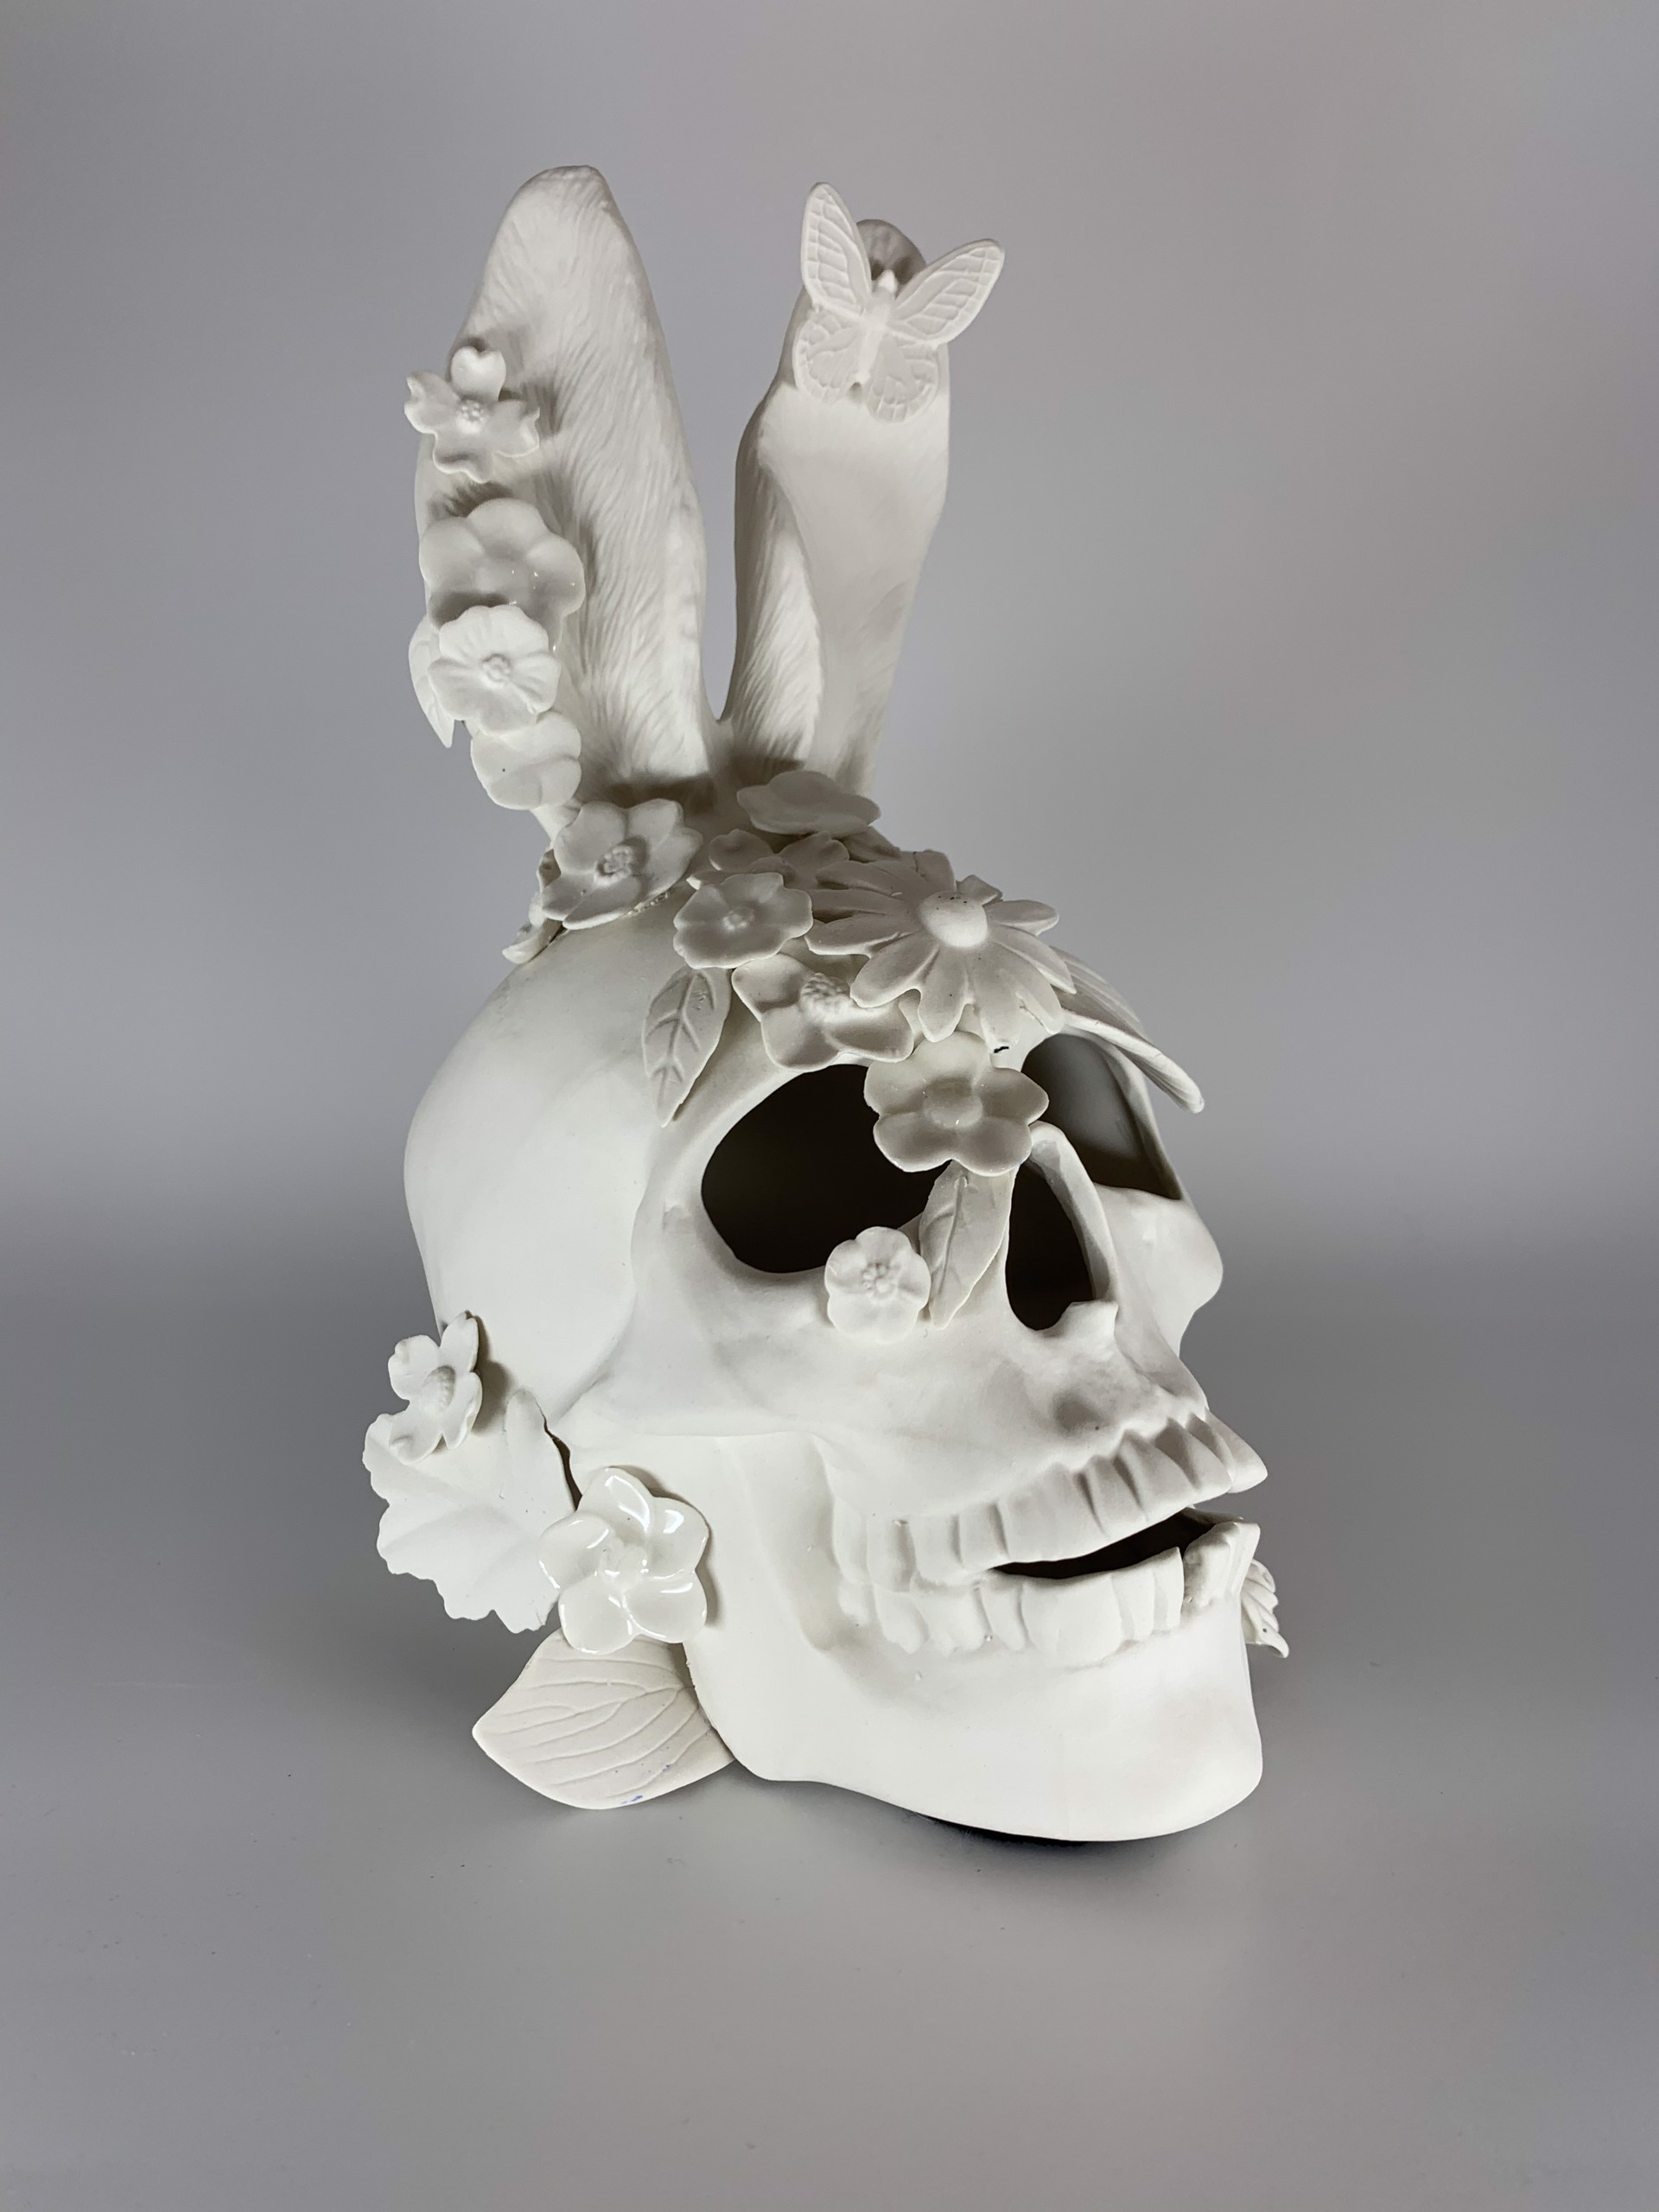 Skull with Ears by Jeff Herrity